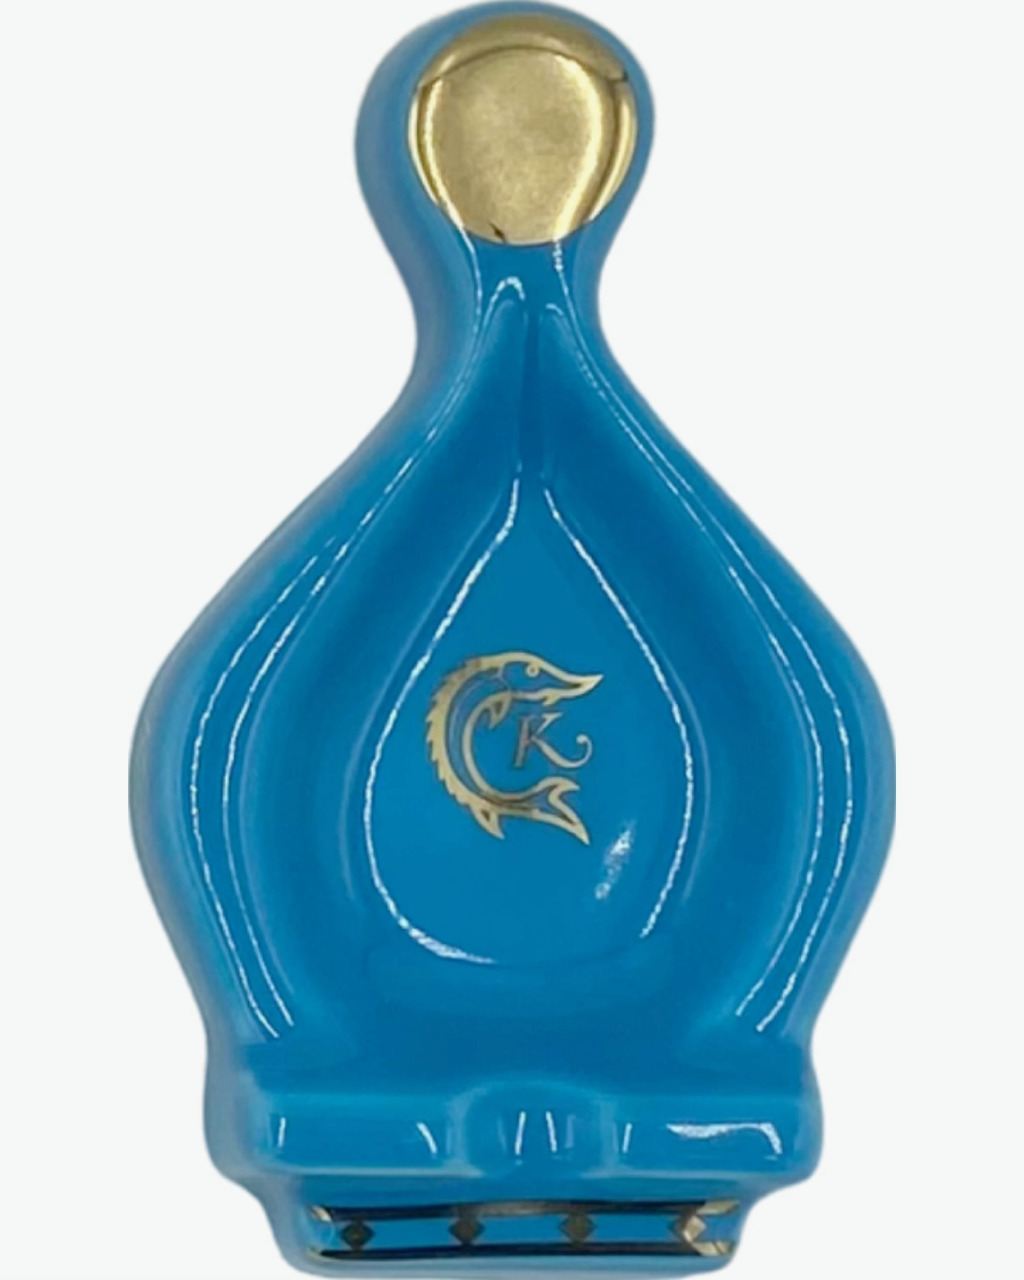 New Iconic Caviar Kaspia Paris Restaurant Blue Ceramic Ashtray